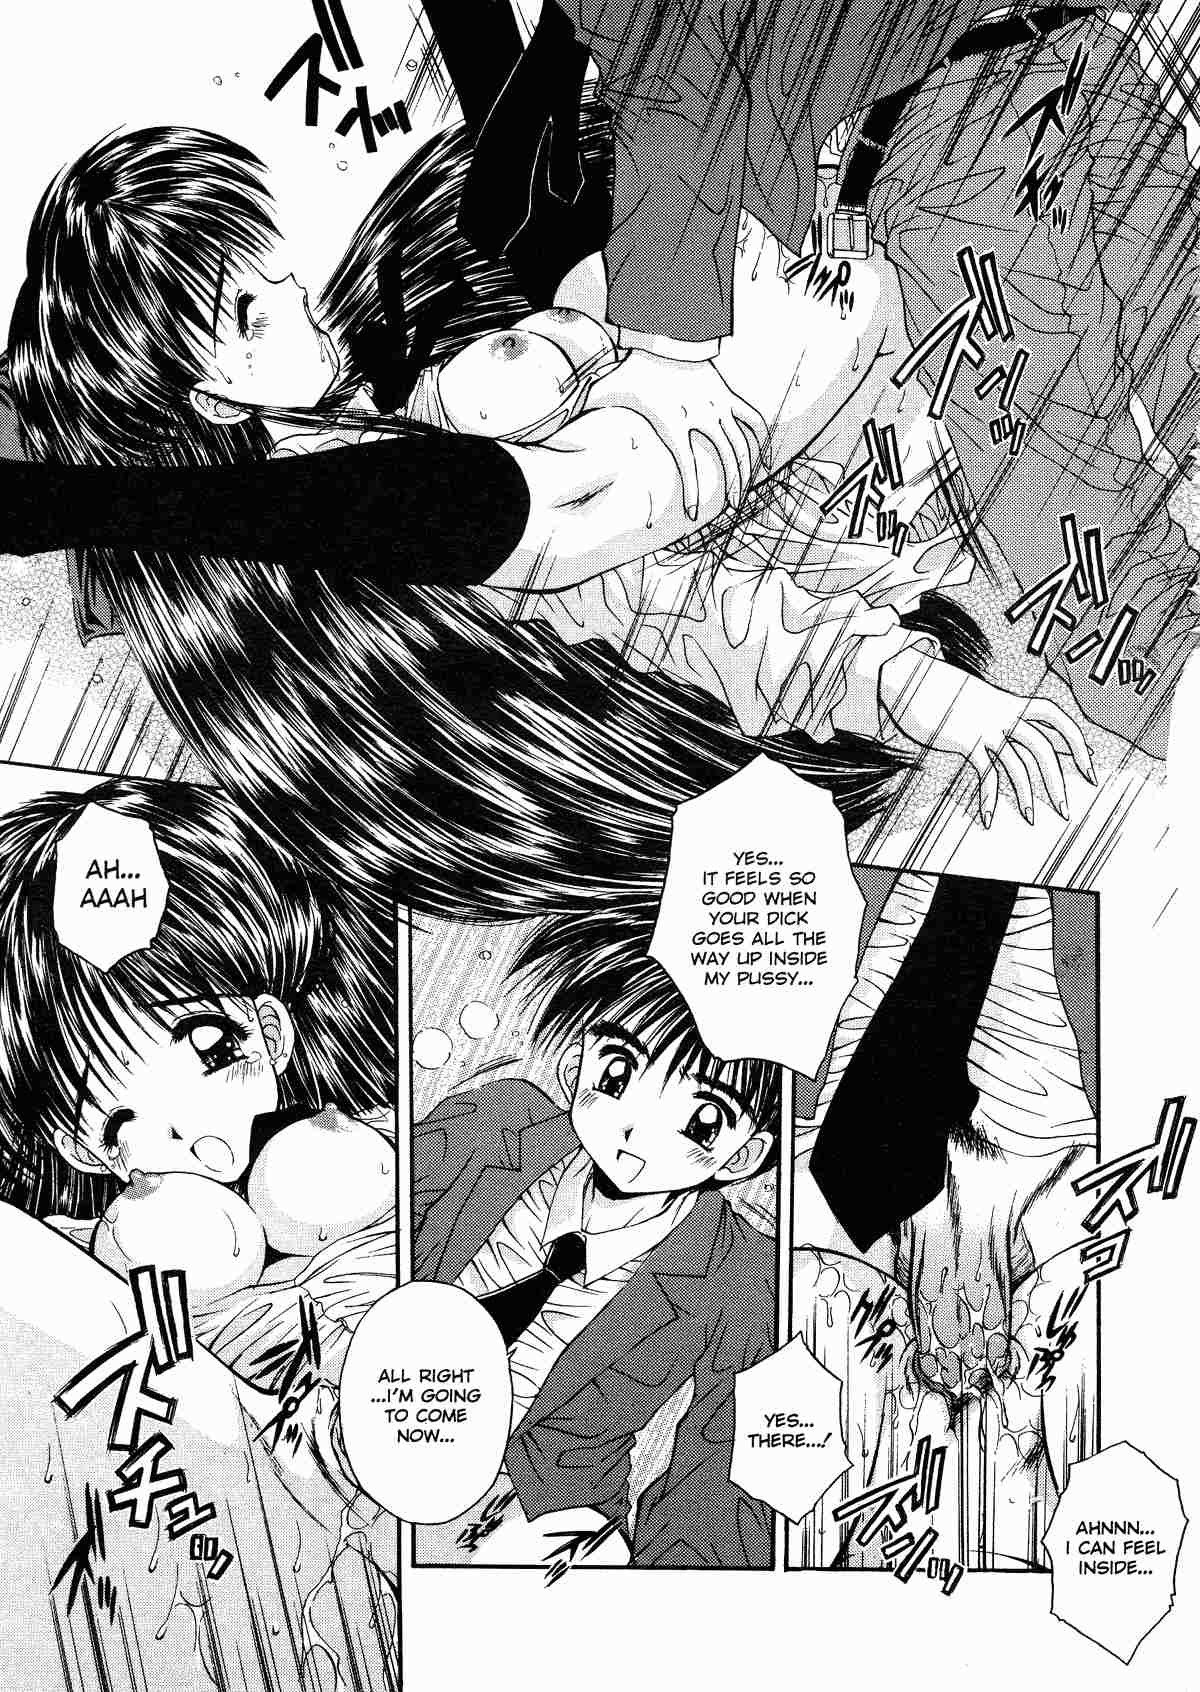 Innocence 82 hentai manga